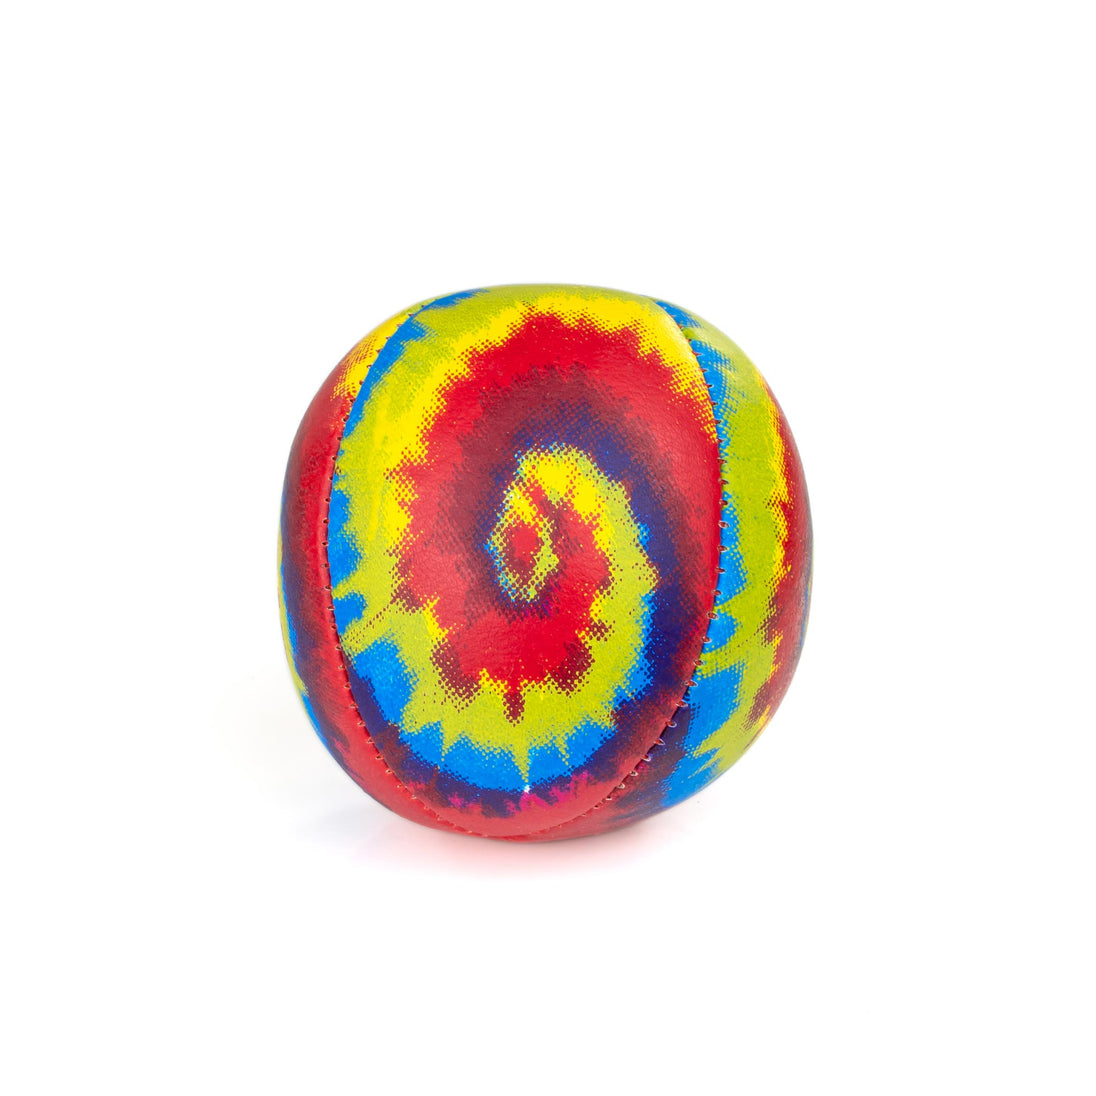 Red / Yellow / Blue / Green Swirls tye dye juggling ball